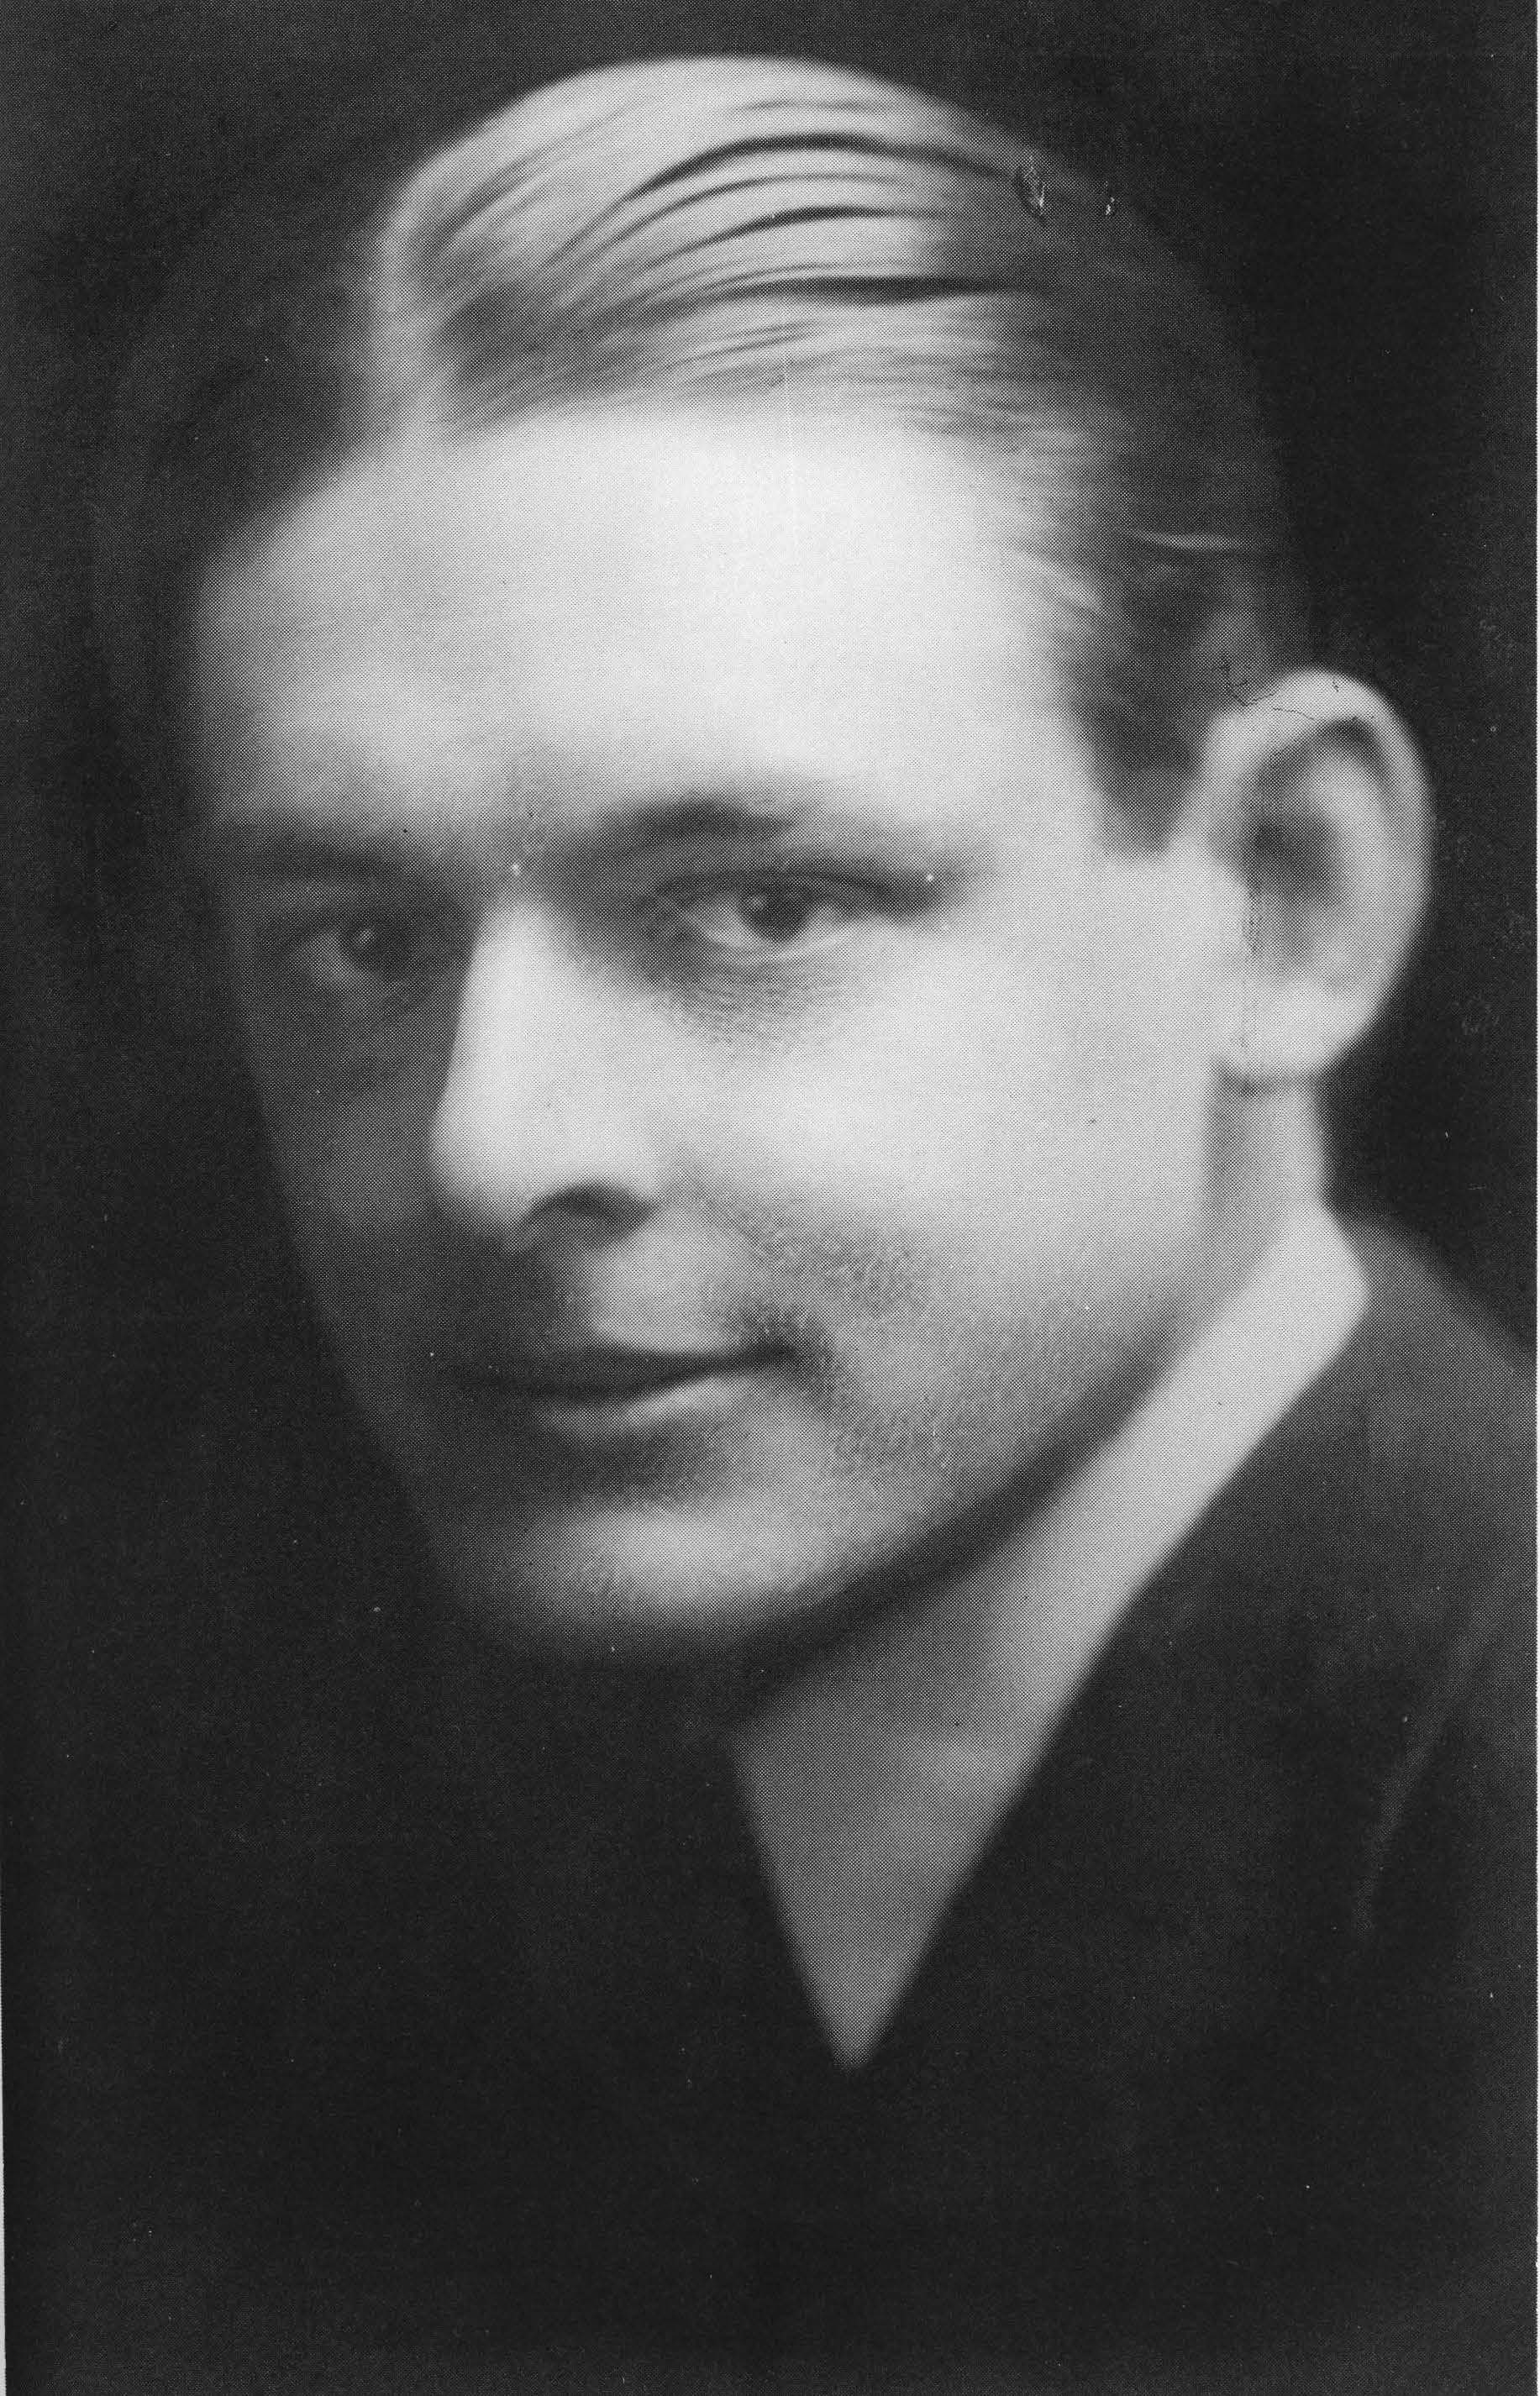 10. Eliot, age 25 or 26 (ca. 1913), as graduate student in Harvard Philosophy Department